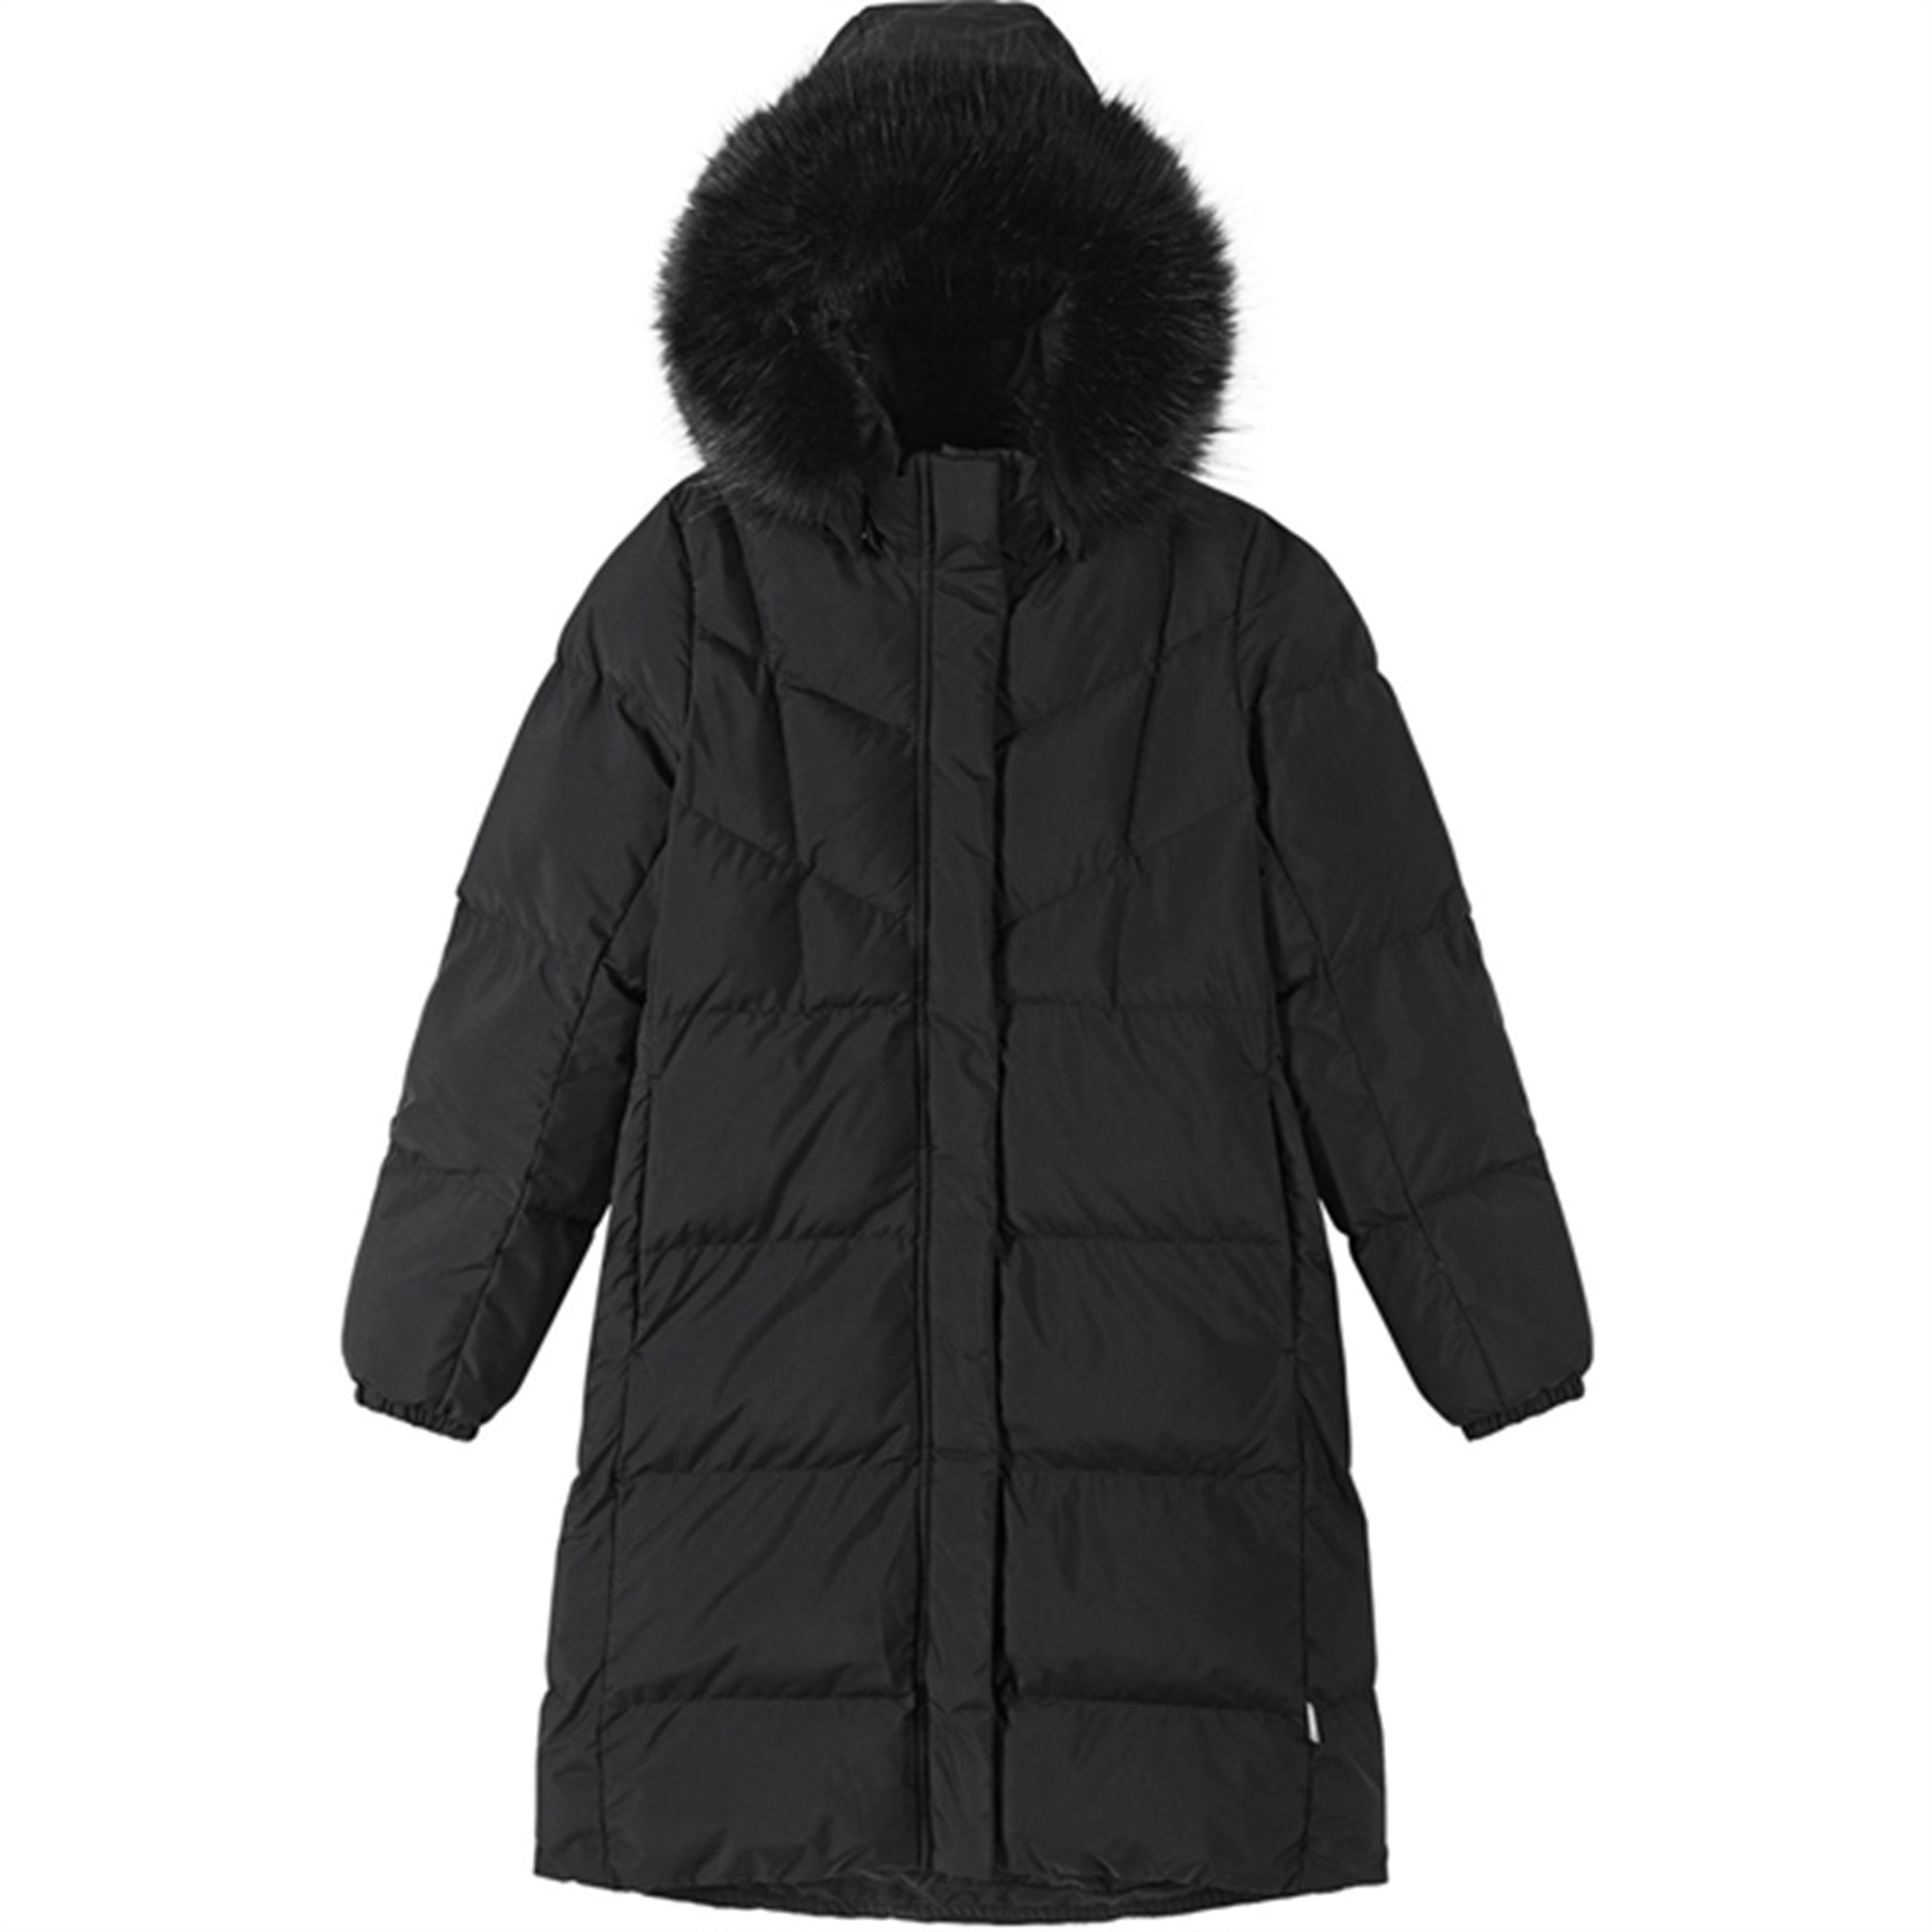 Reima Winter Jacket Siemaus Black 7